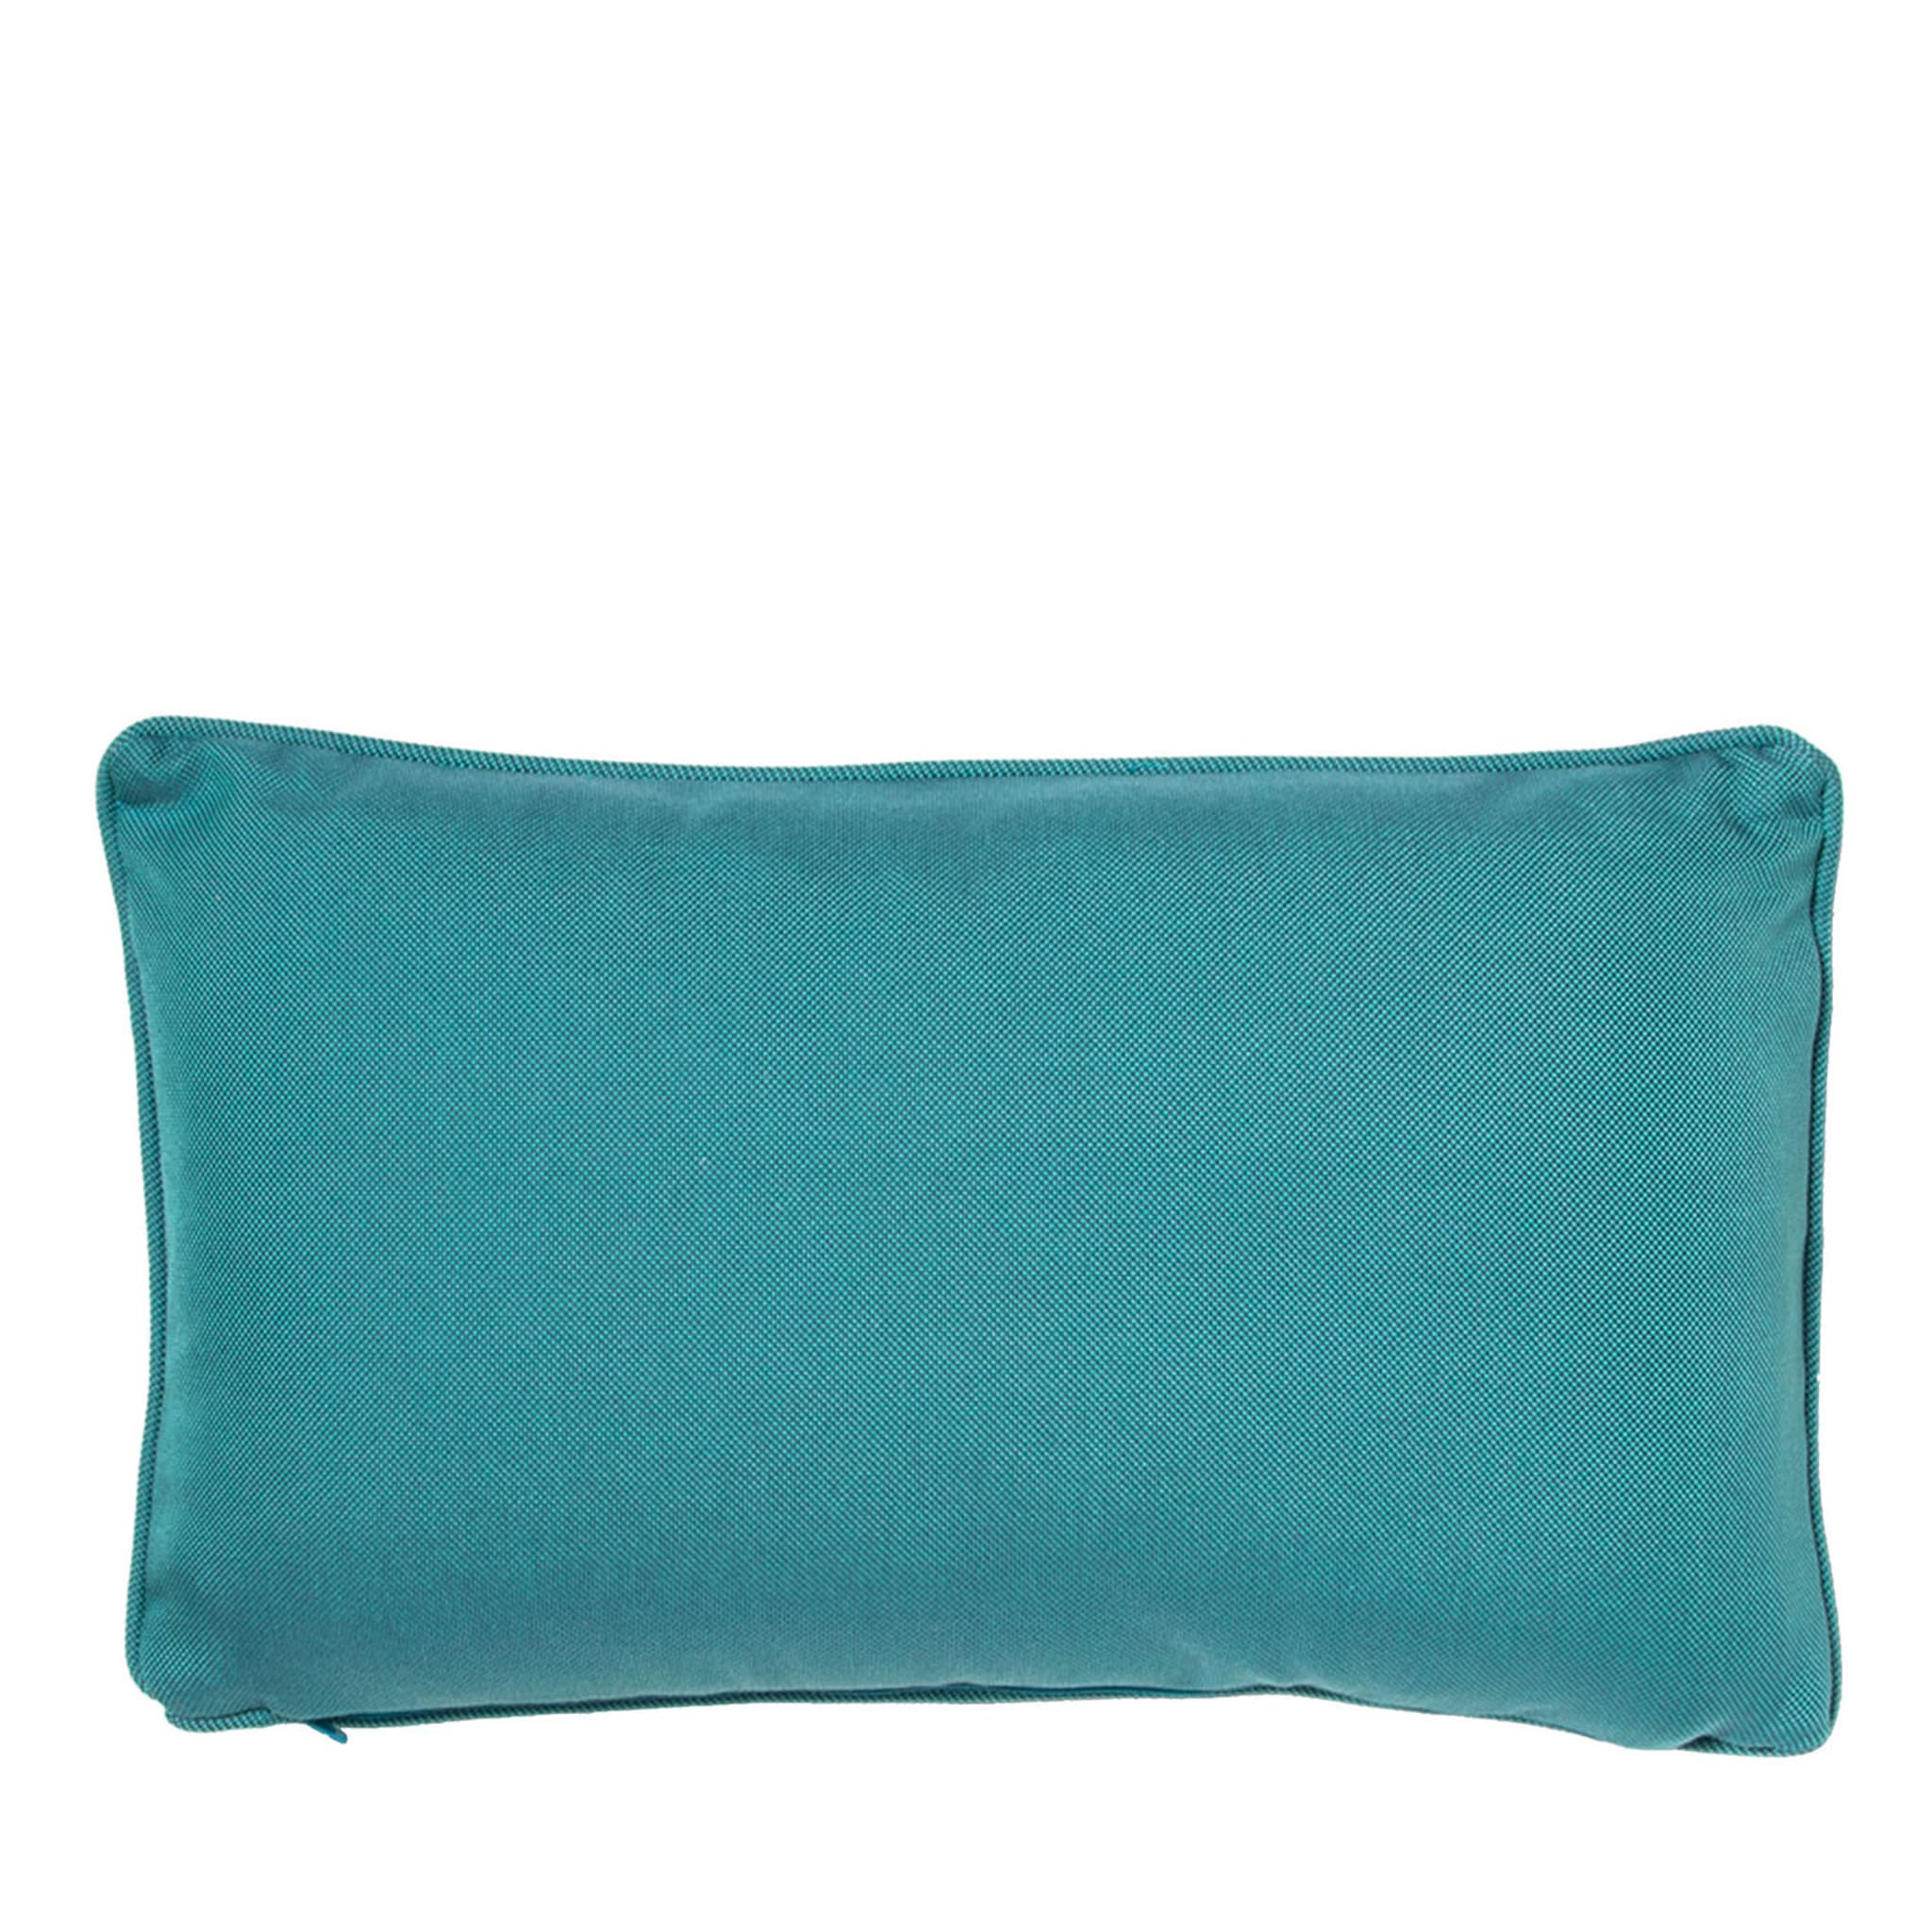 Mia Spring Waterproof Small Cushion by Luciana Gomez - Alternative view 1